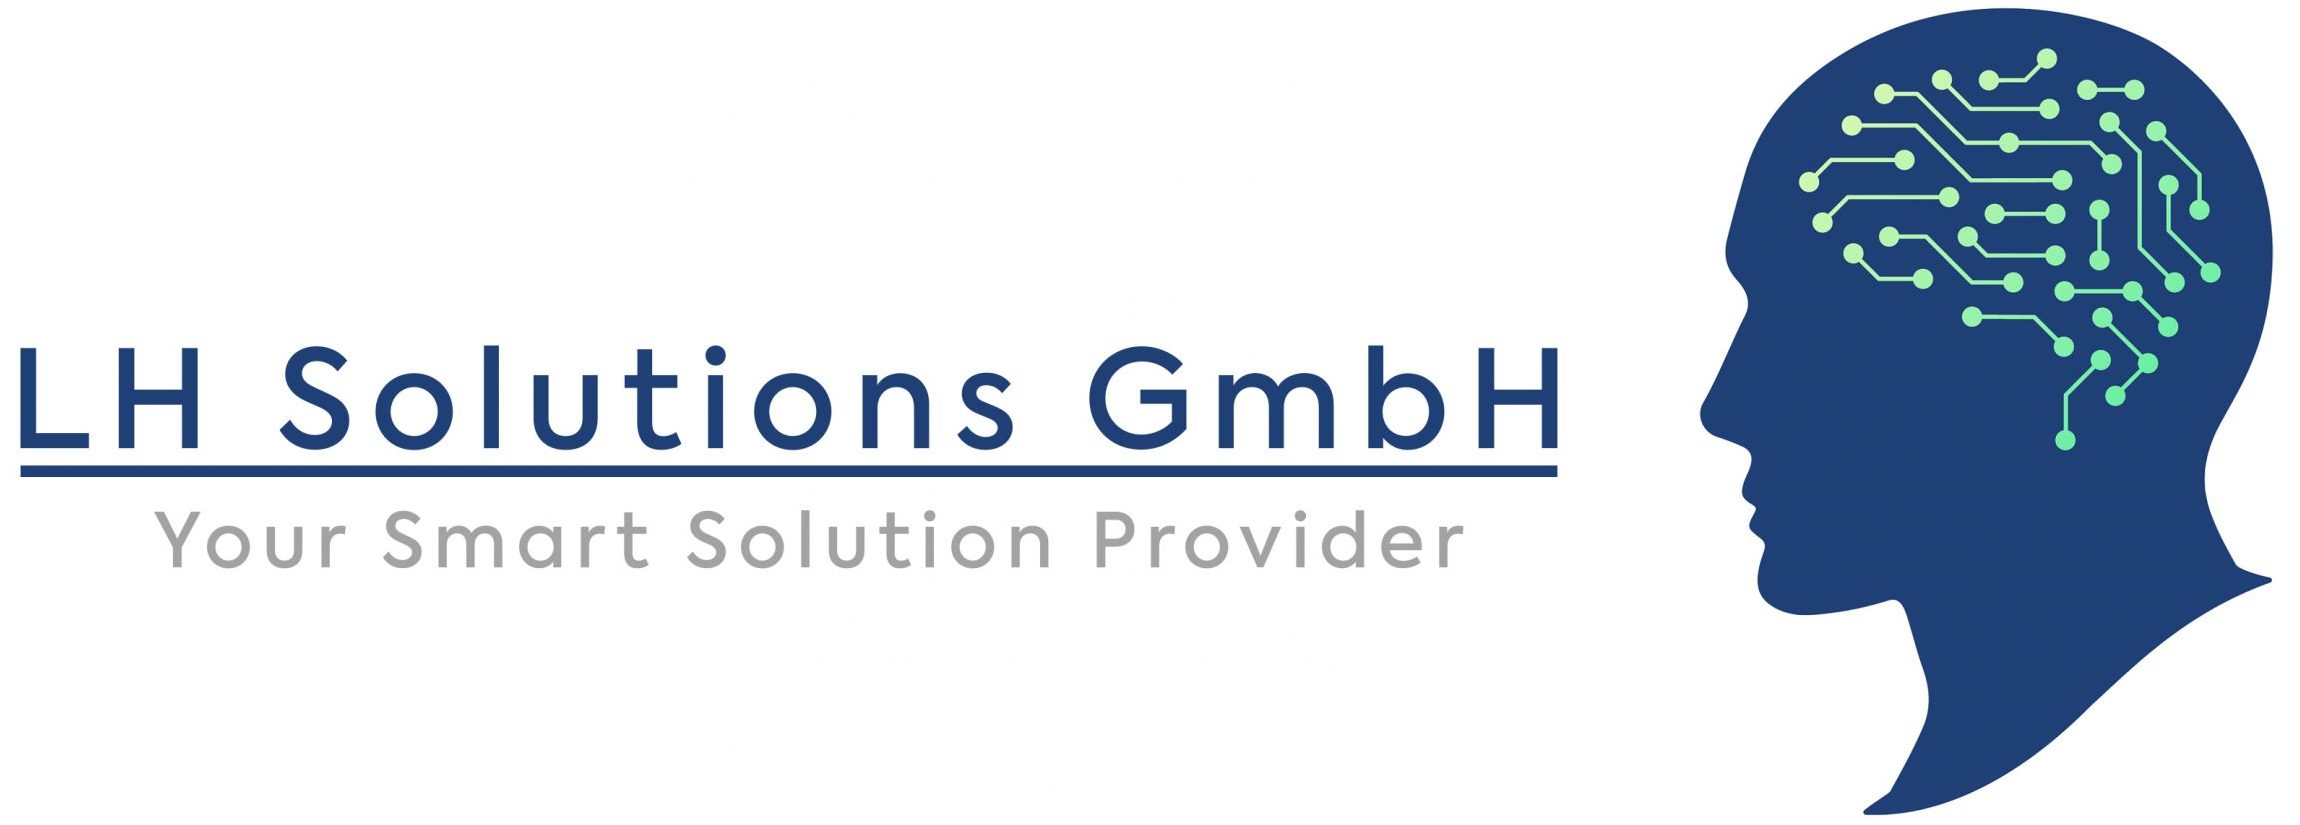 LH Solutions GmbH